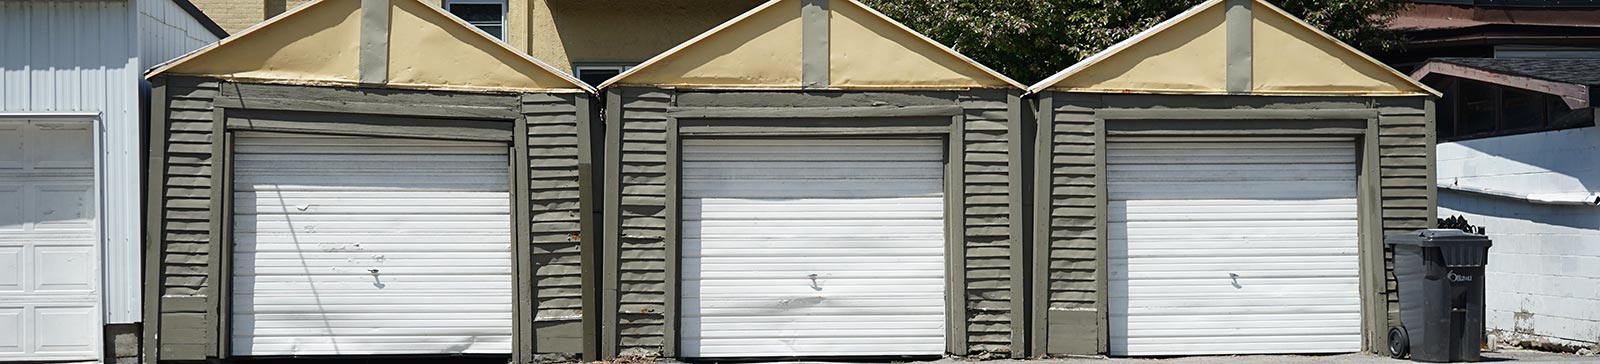 Garage Door Maintenance Near Me | Corona, CA